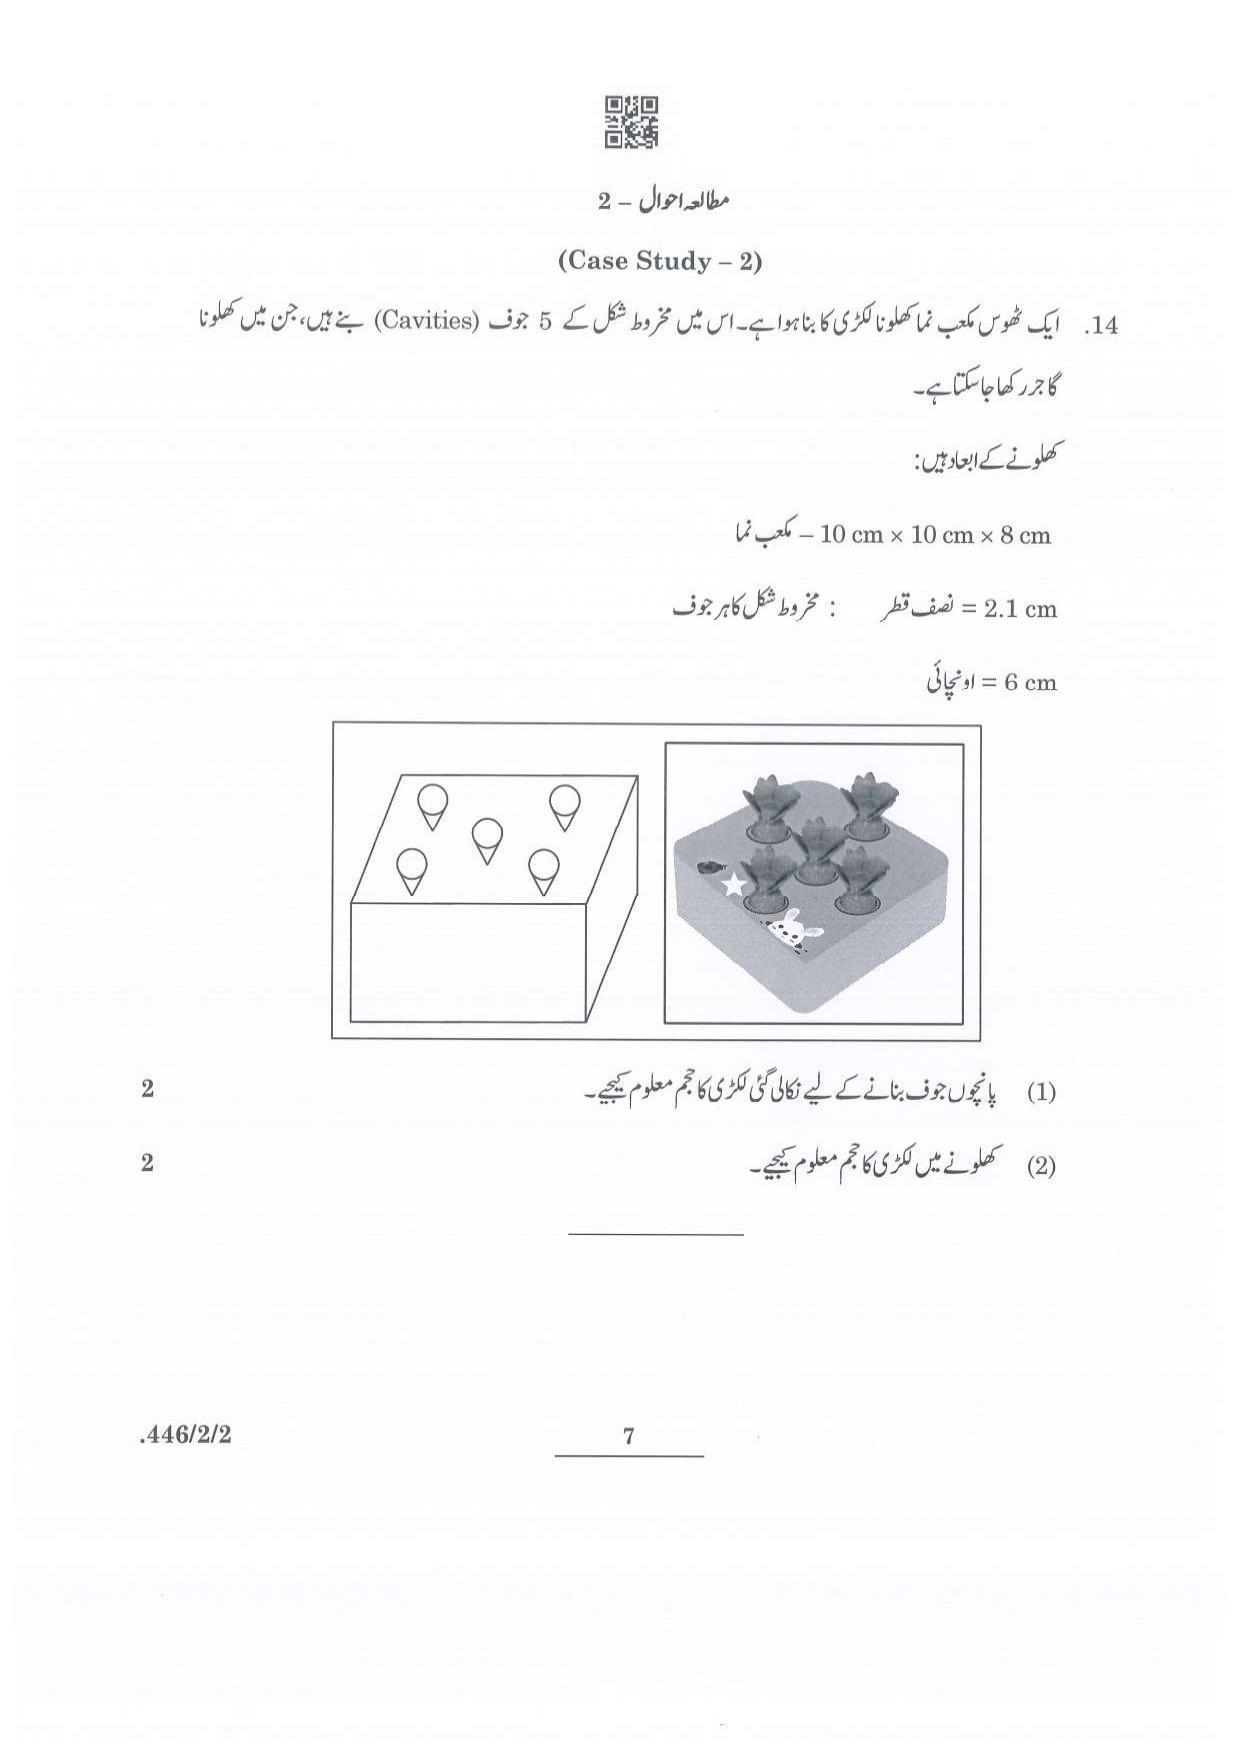 CBSE Class 10 Maths Basic - Urdu (446/2/2 - SET 2) 2022 Question Paper - Page 7